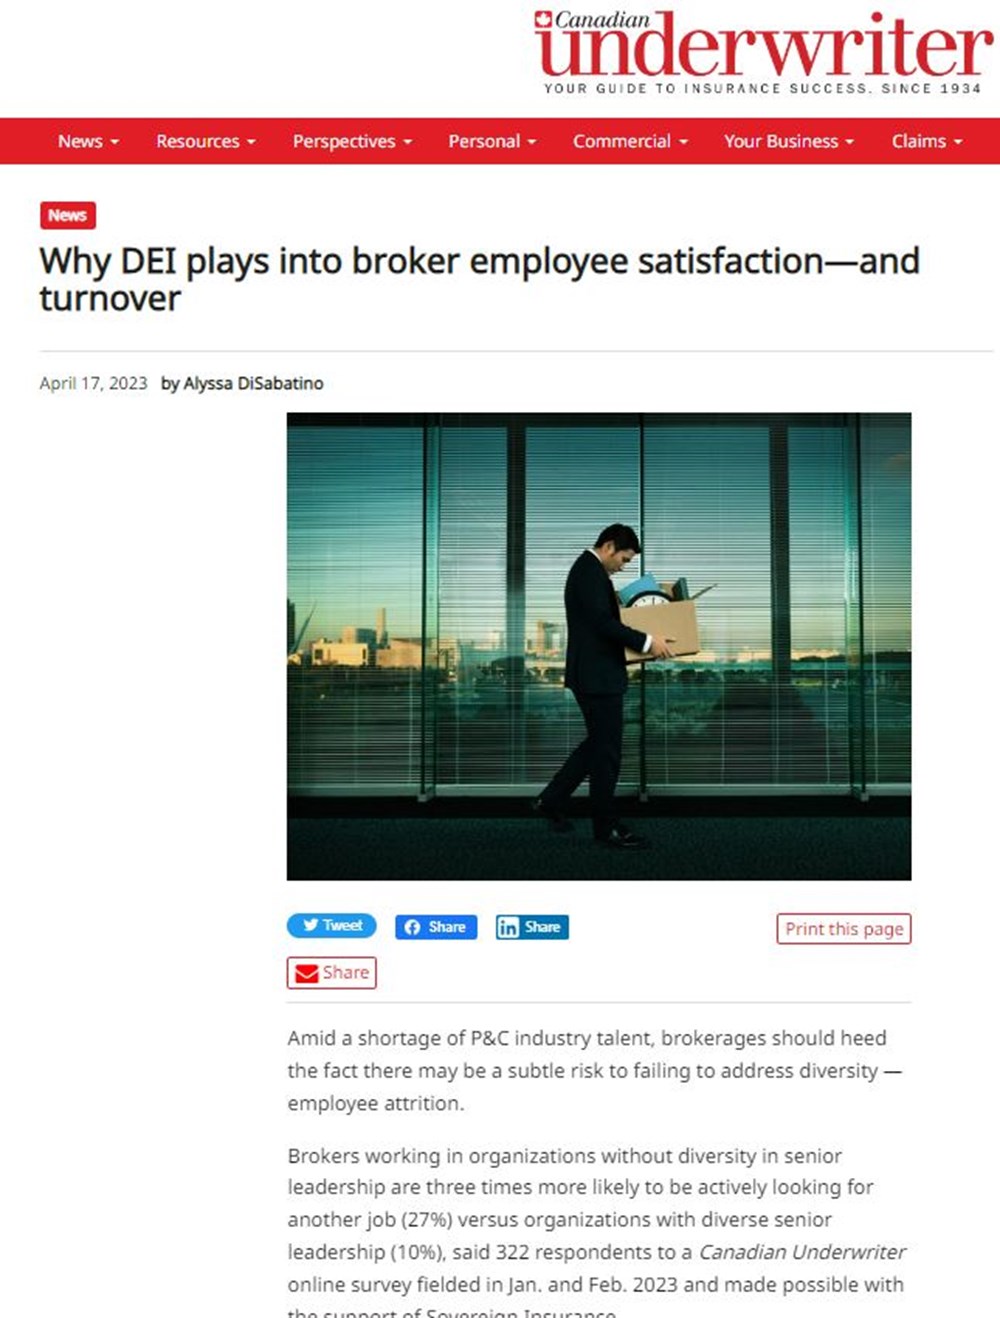 Une capture d'écran de l'article en anglais "Why DEI plays into broker employee satisfaction—and turnover"